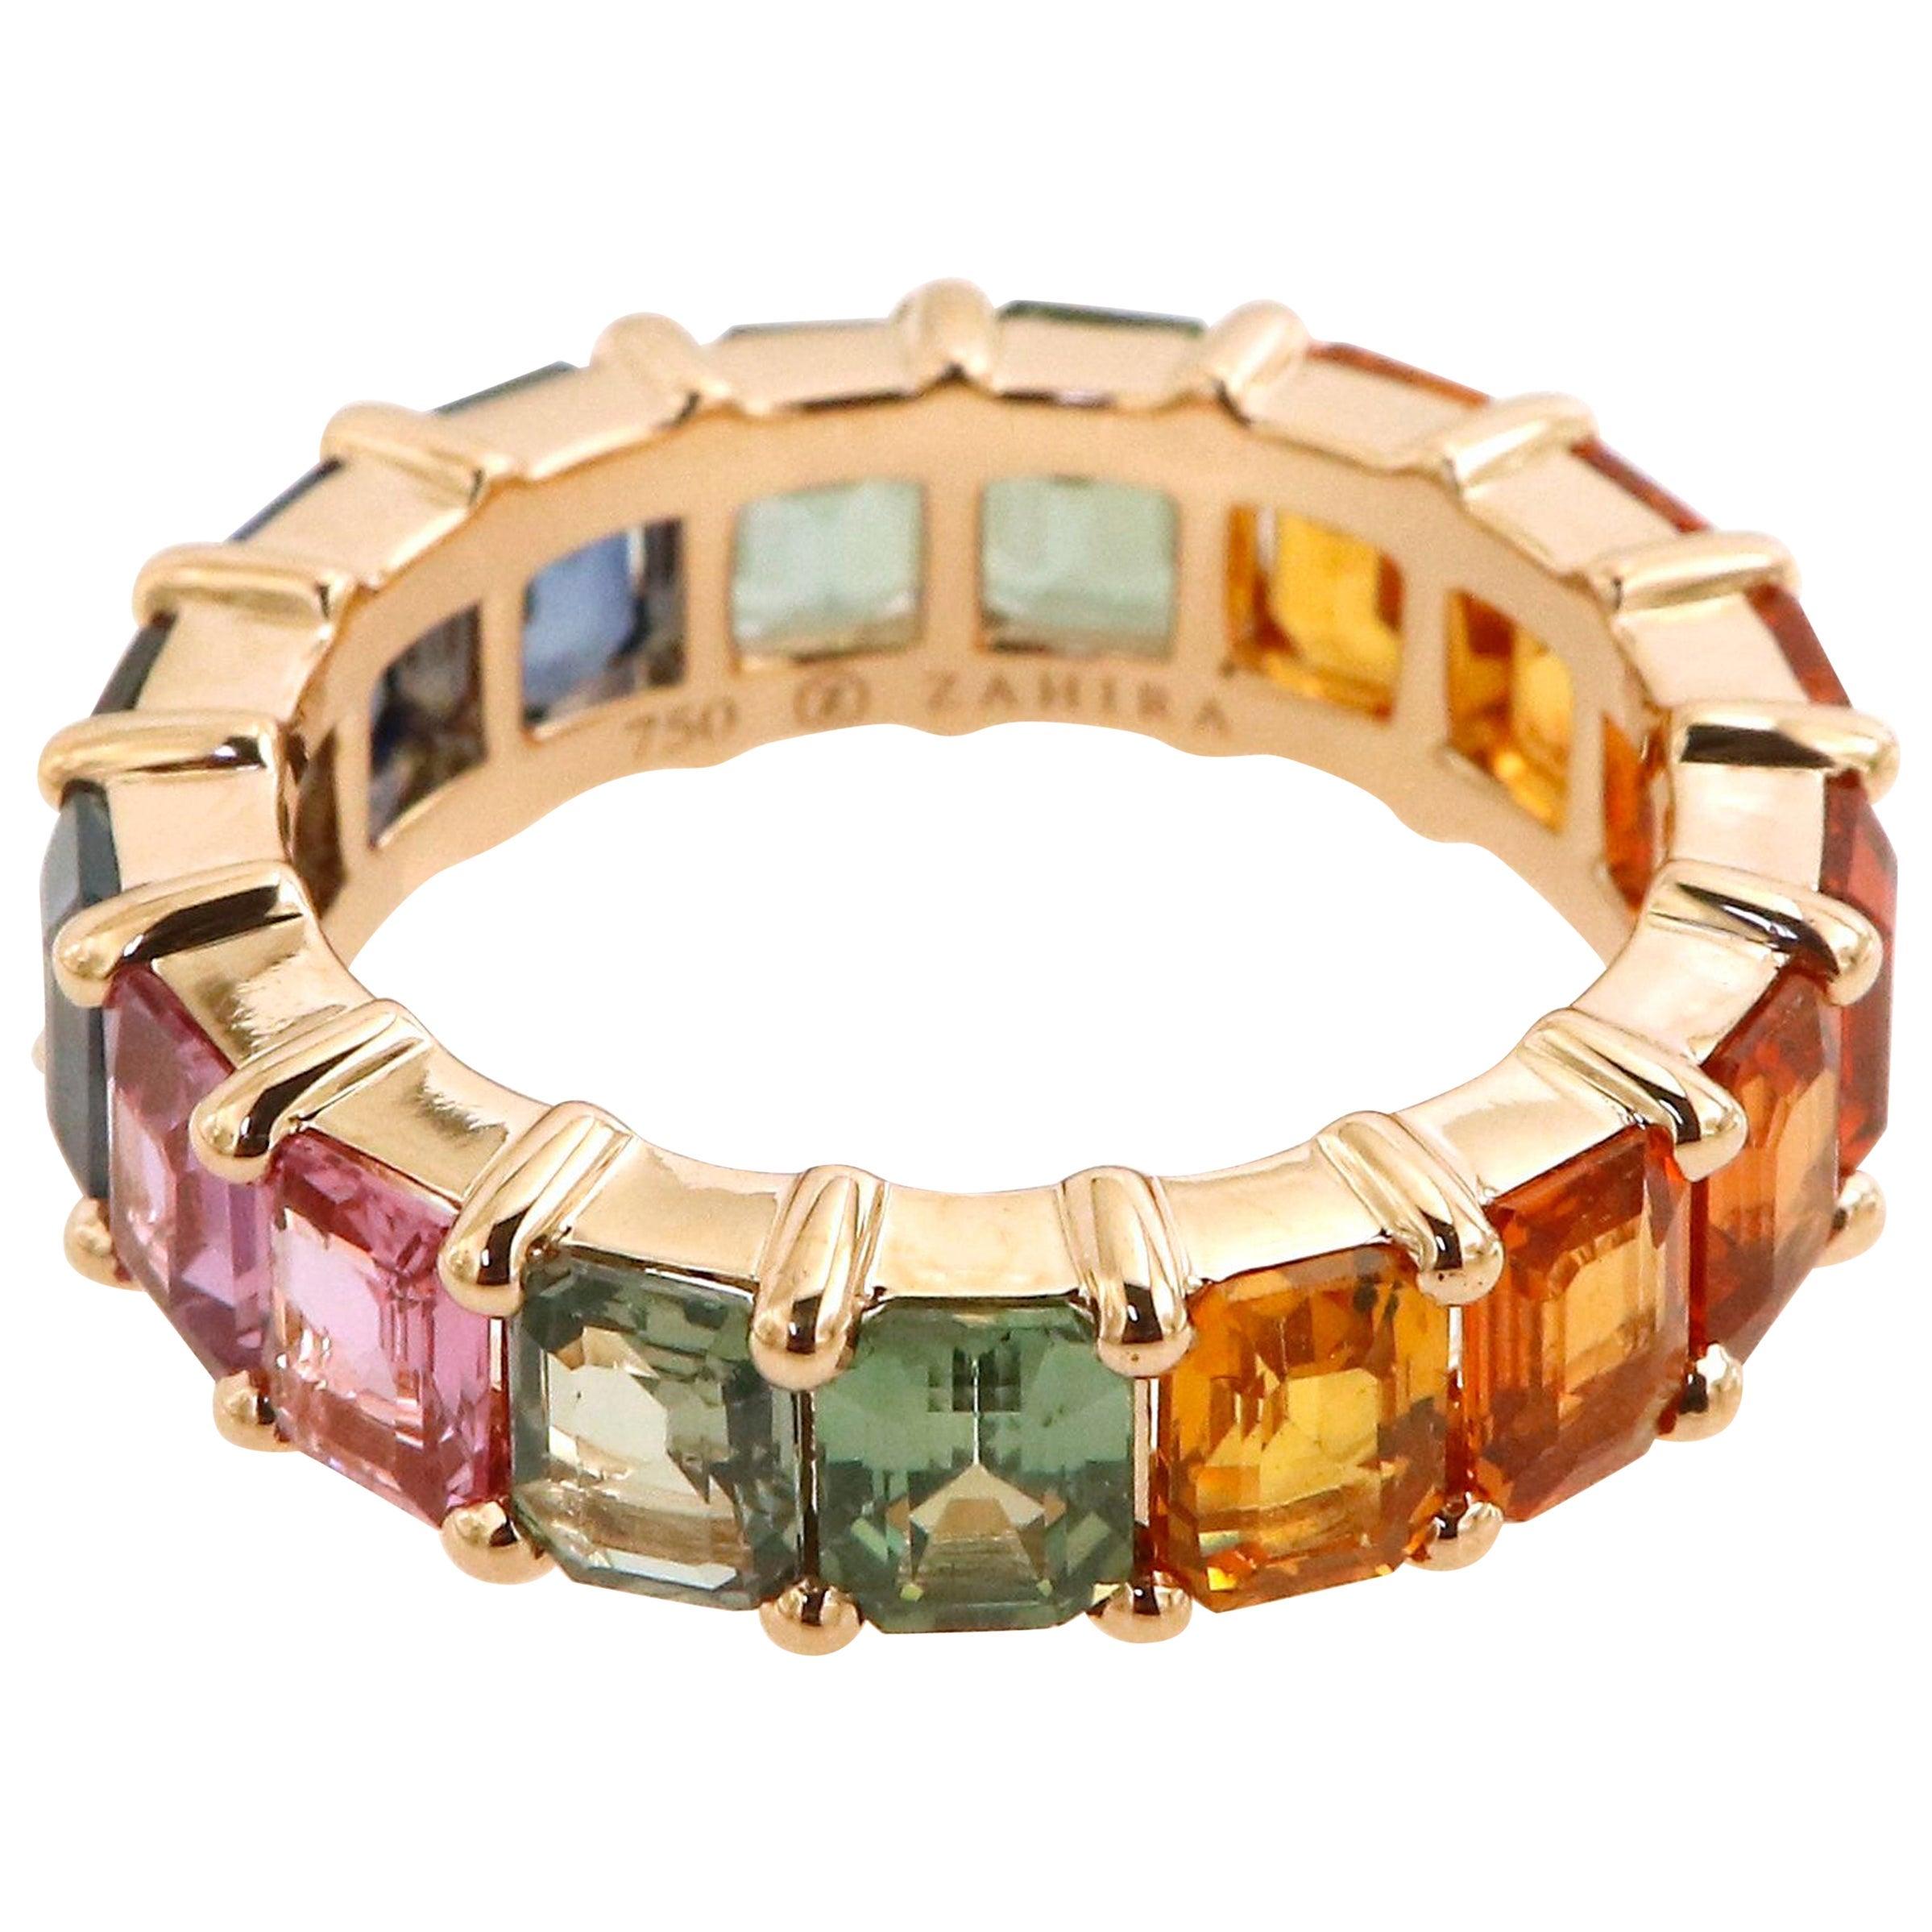 For Sale:  8.97 Carat Emerald Cut Rainbow Sapphire Eternity Band in 18 Karat Pink Gold